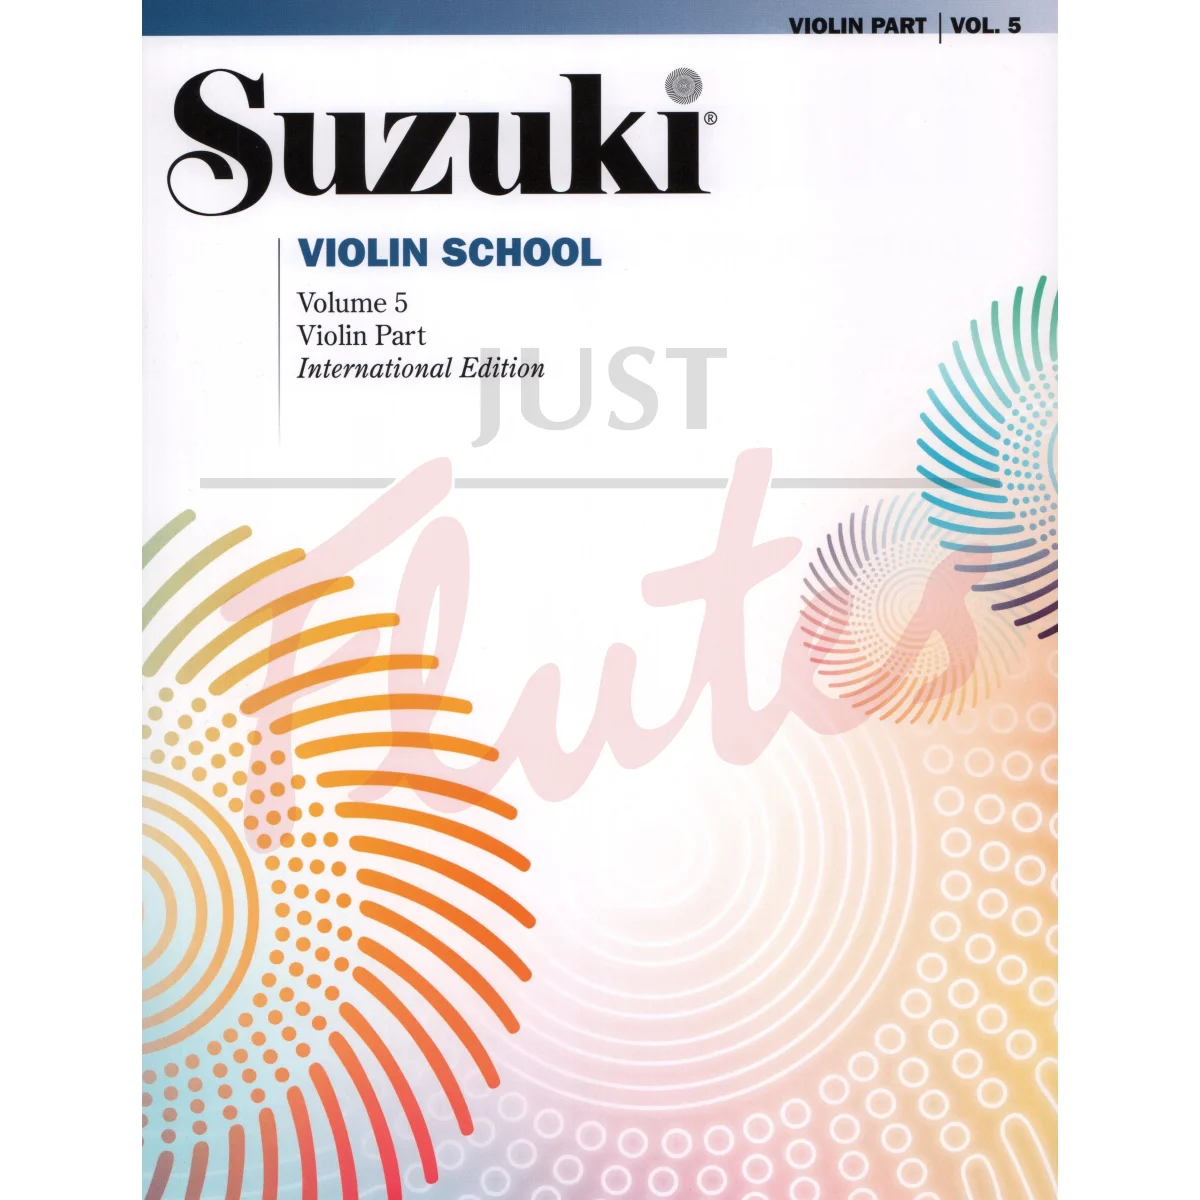 Suzuki Violin School Vol 5 (International Edition) [Violin Part]